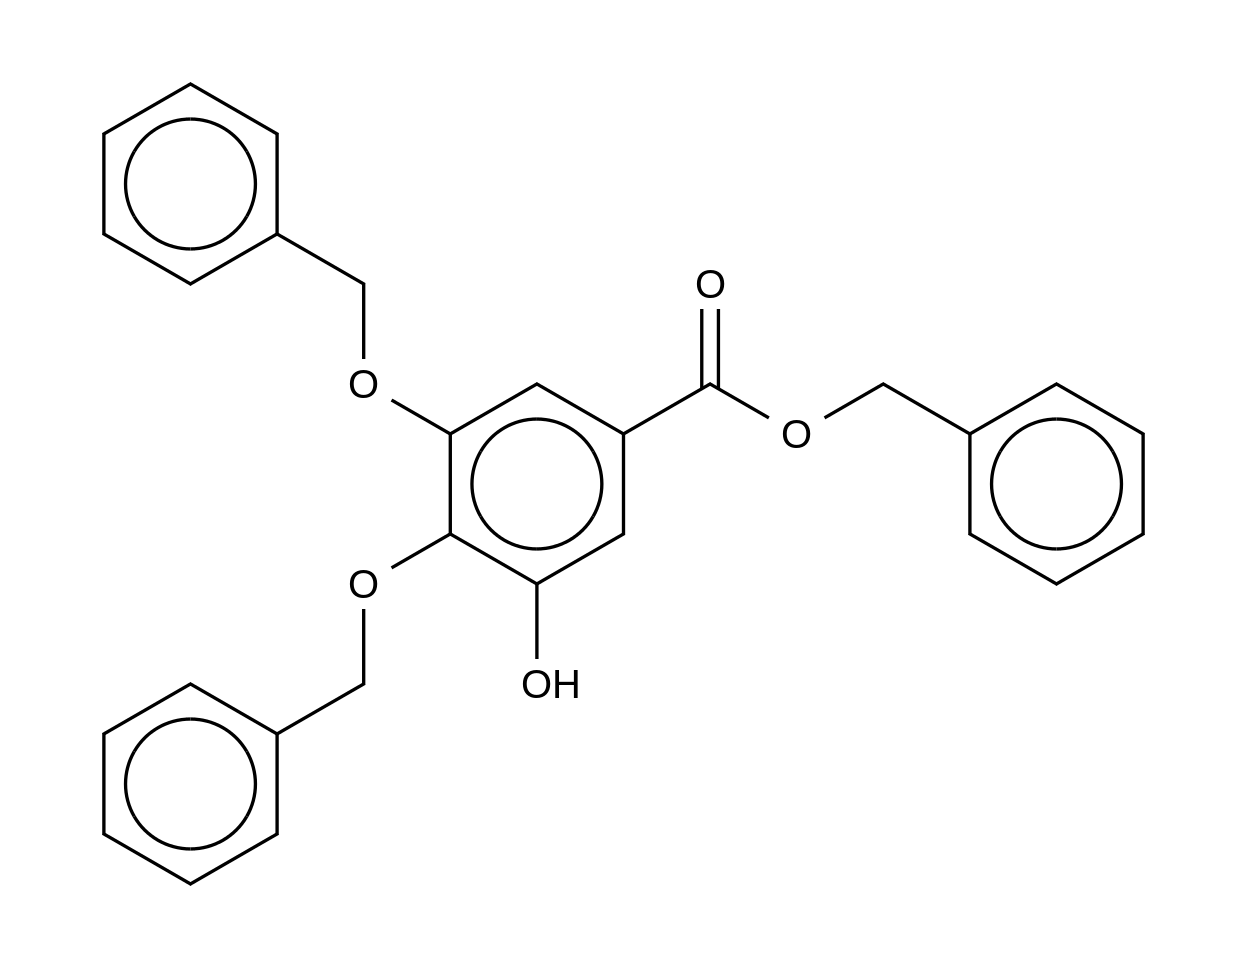 3,4-Dibenzyl-gallic Acid Benzyl Ester